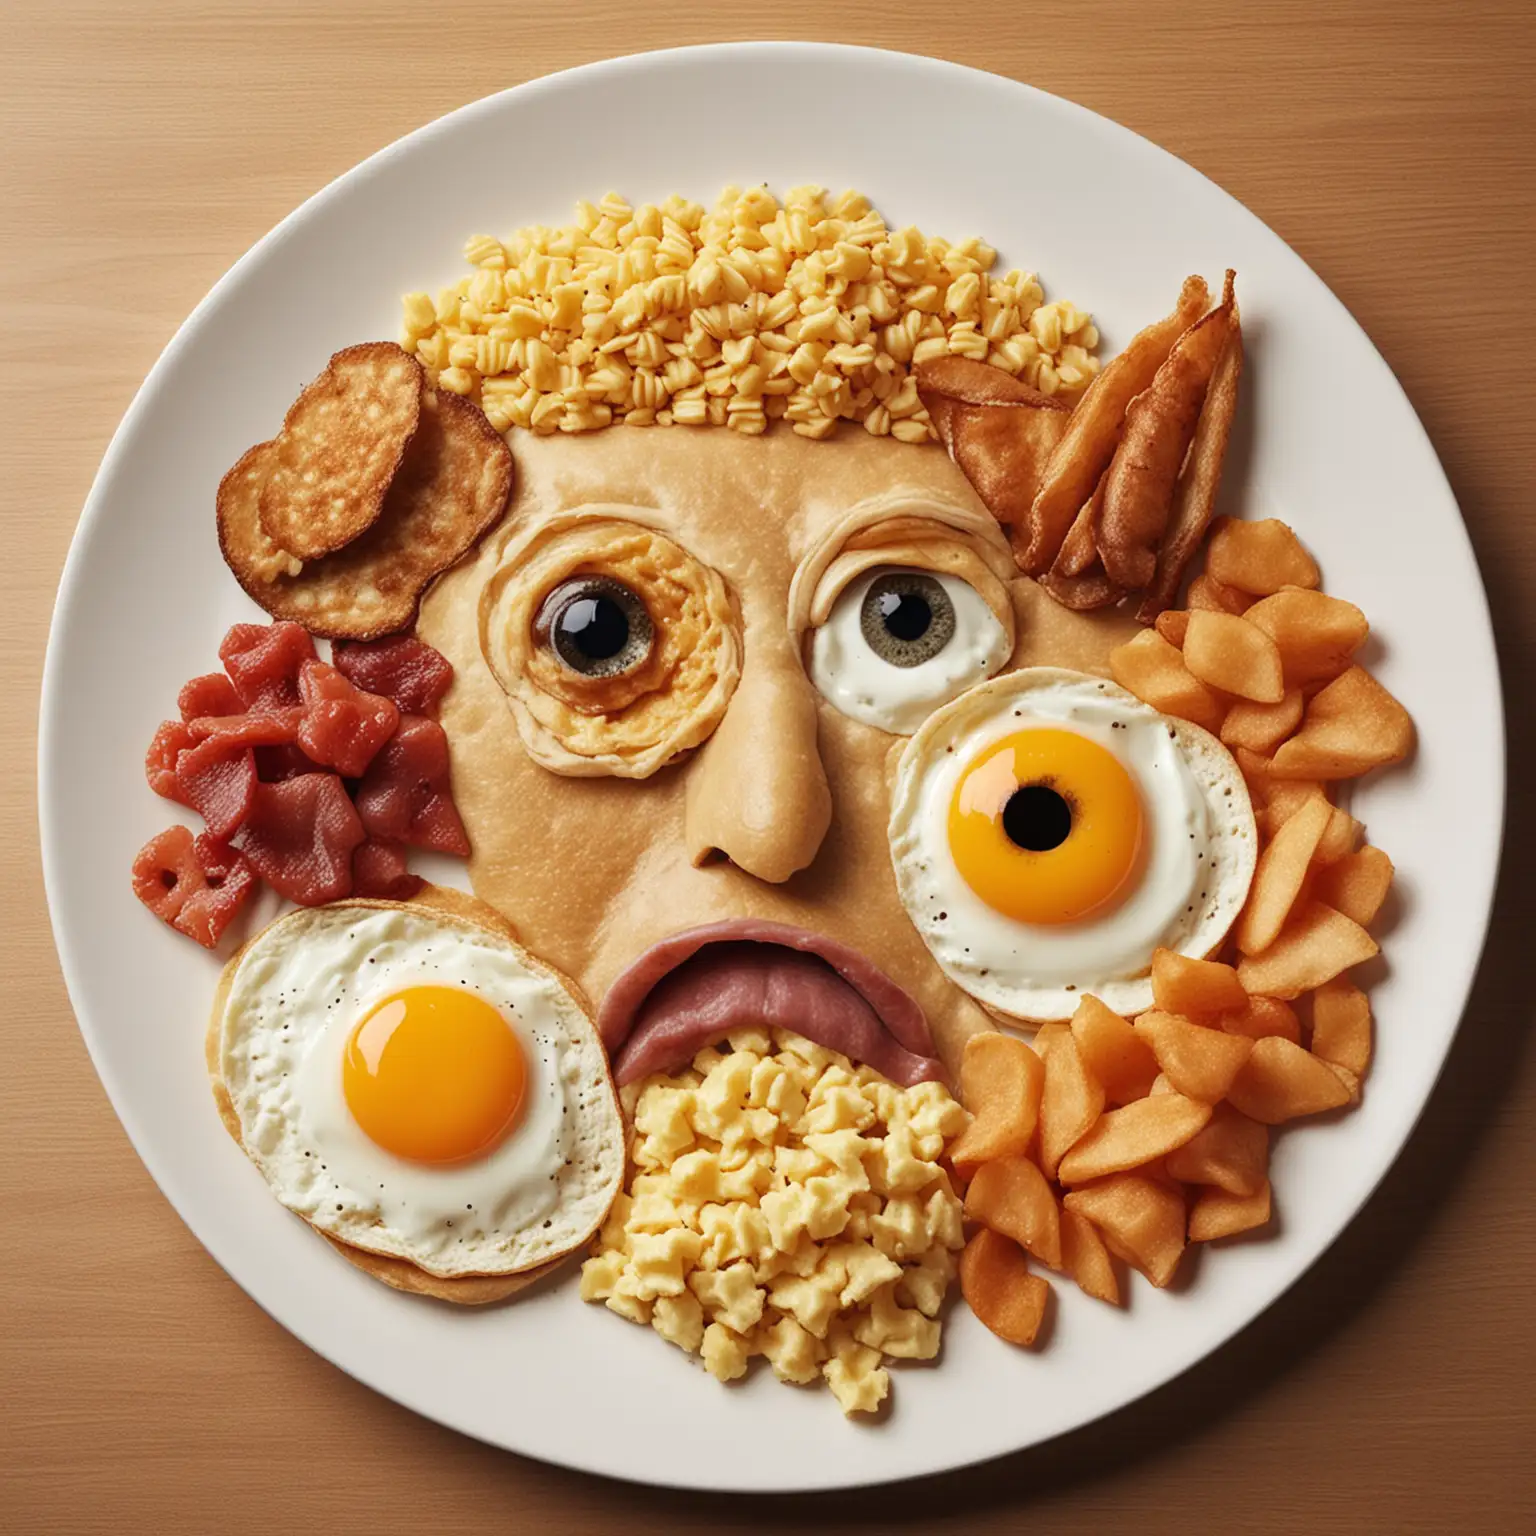 Disturbing Breakfast Animated Food in Agony